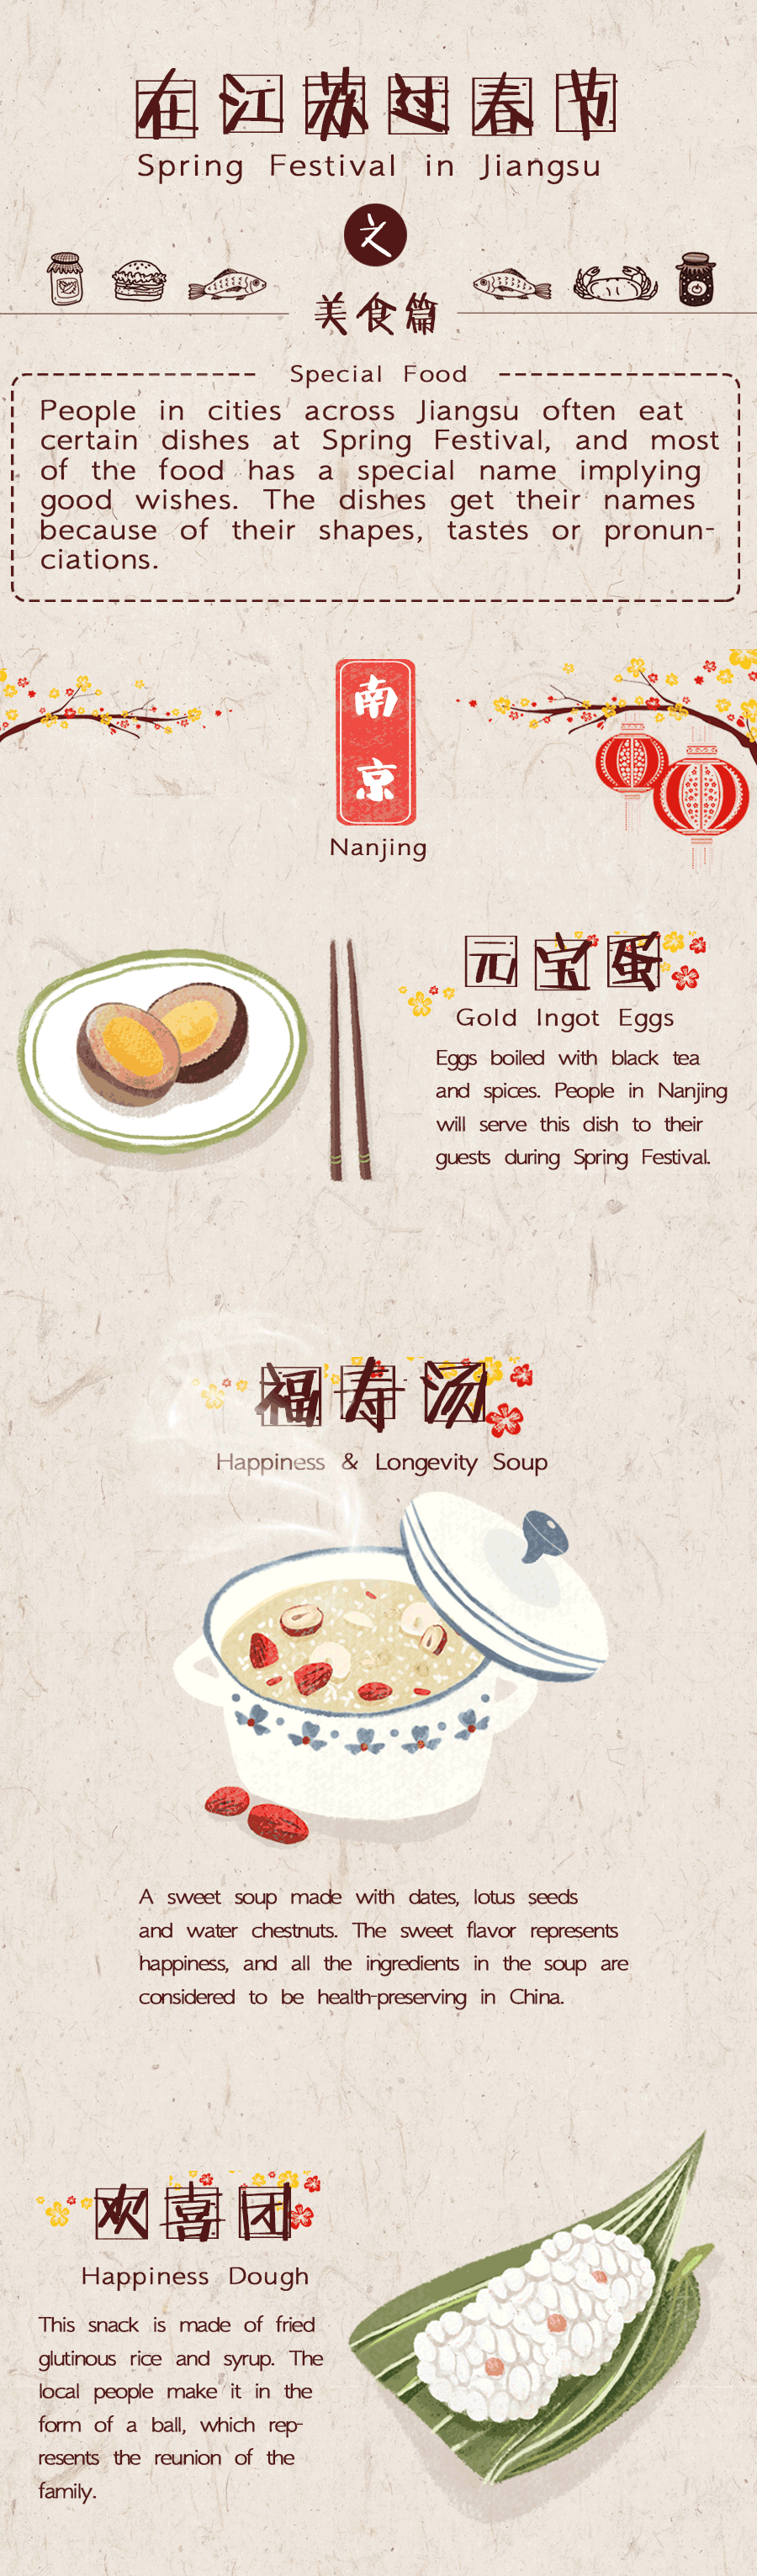 Special foods at Spring Festival in Jiangsu